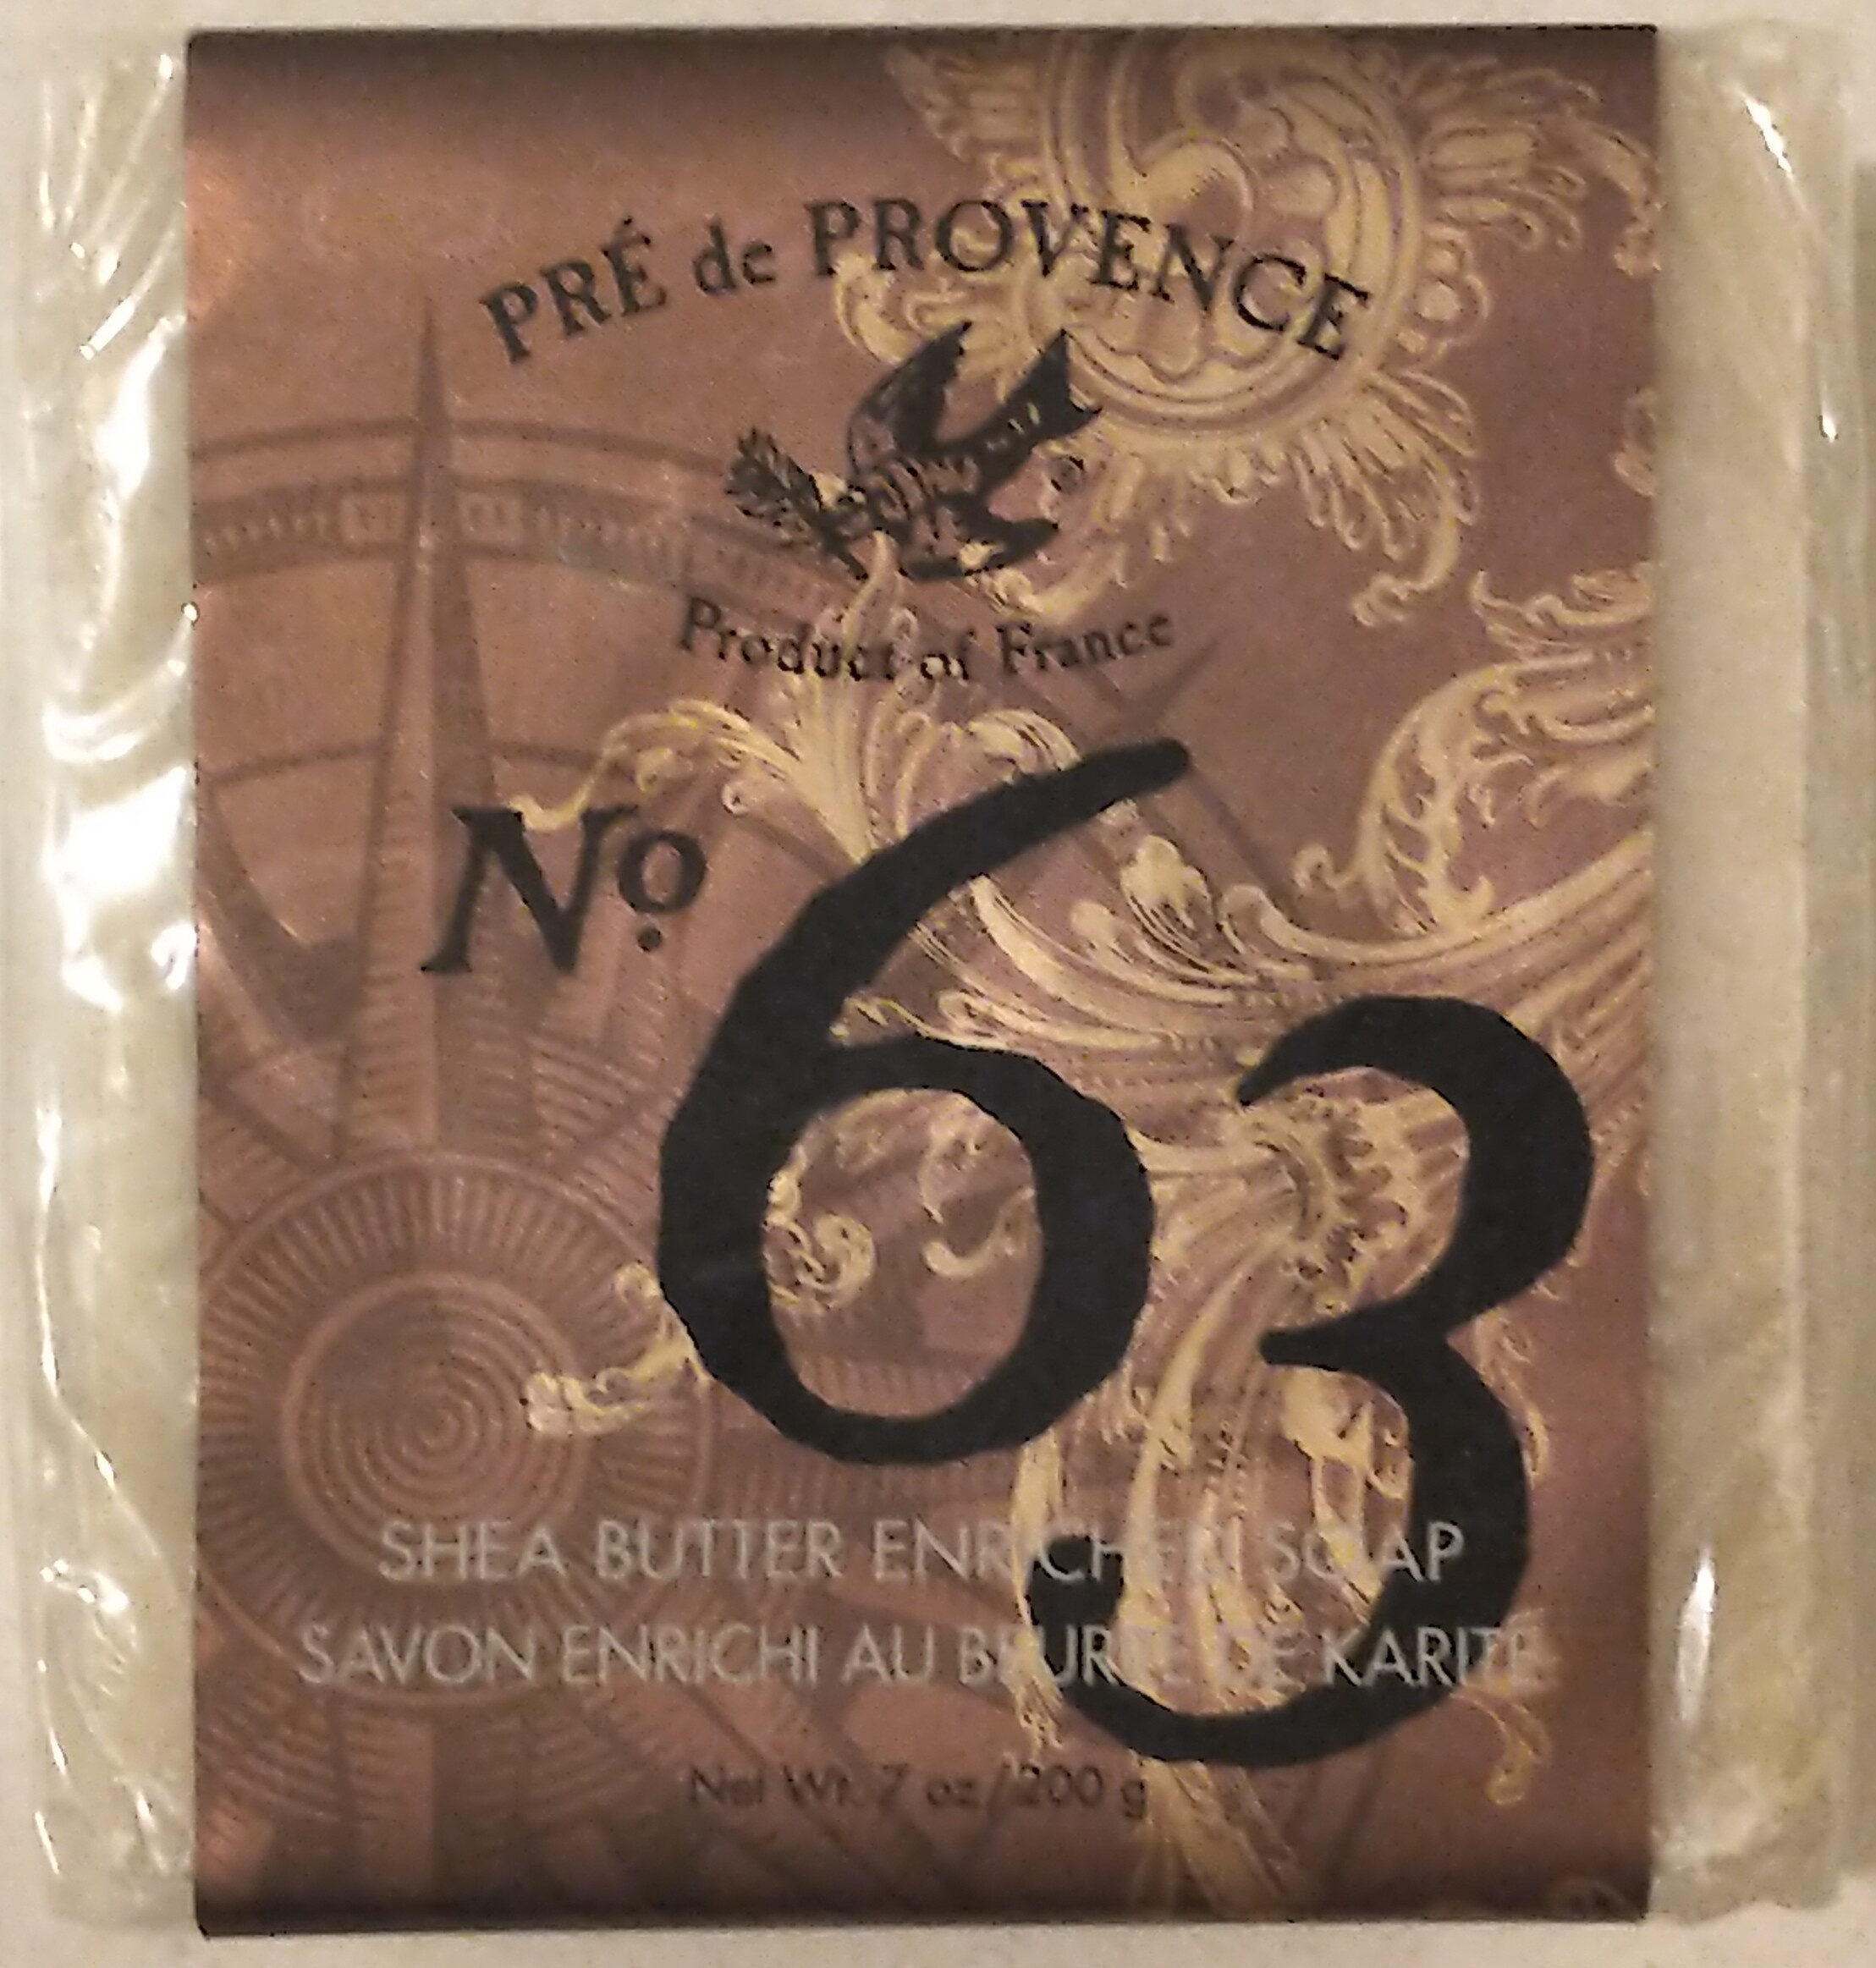 No. 63 Shea Butter Enriched Soap - Produkt - en